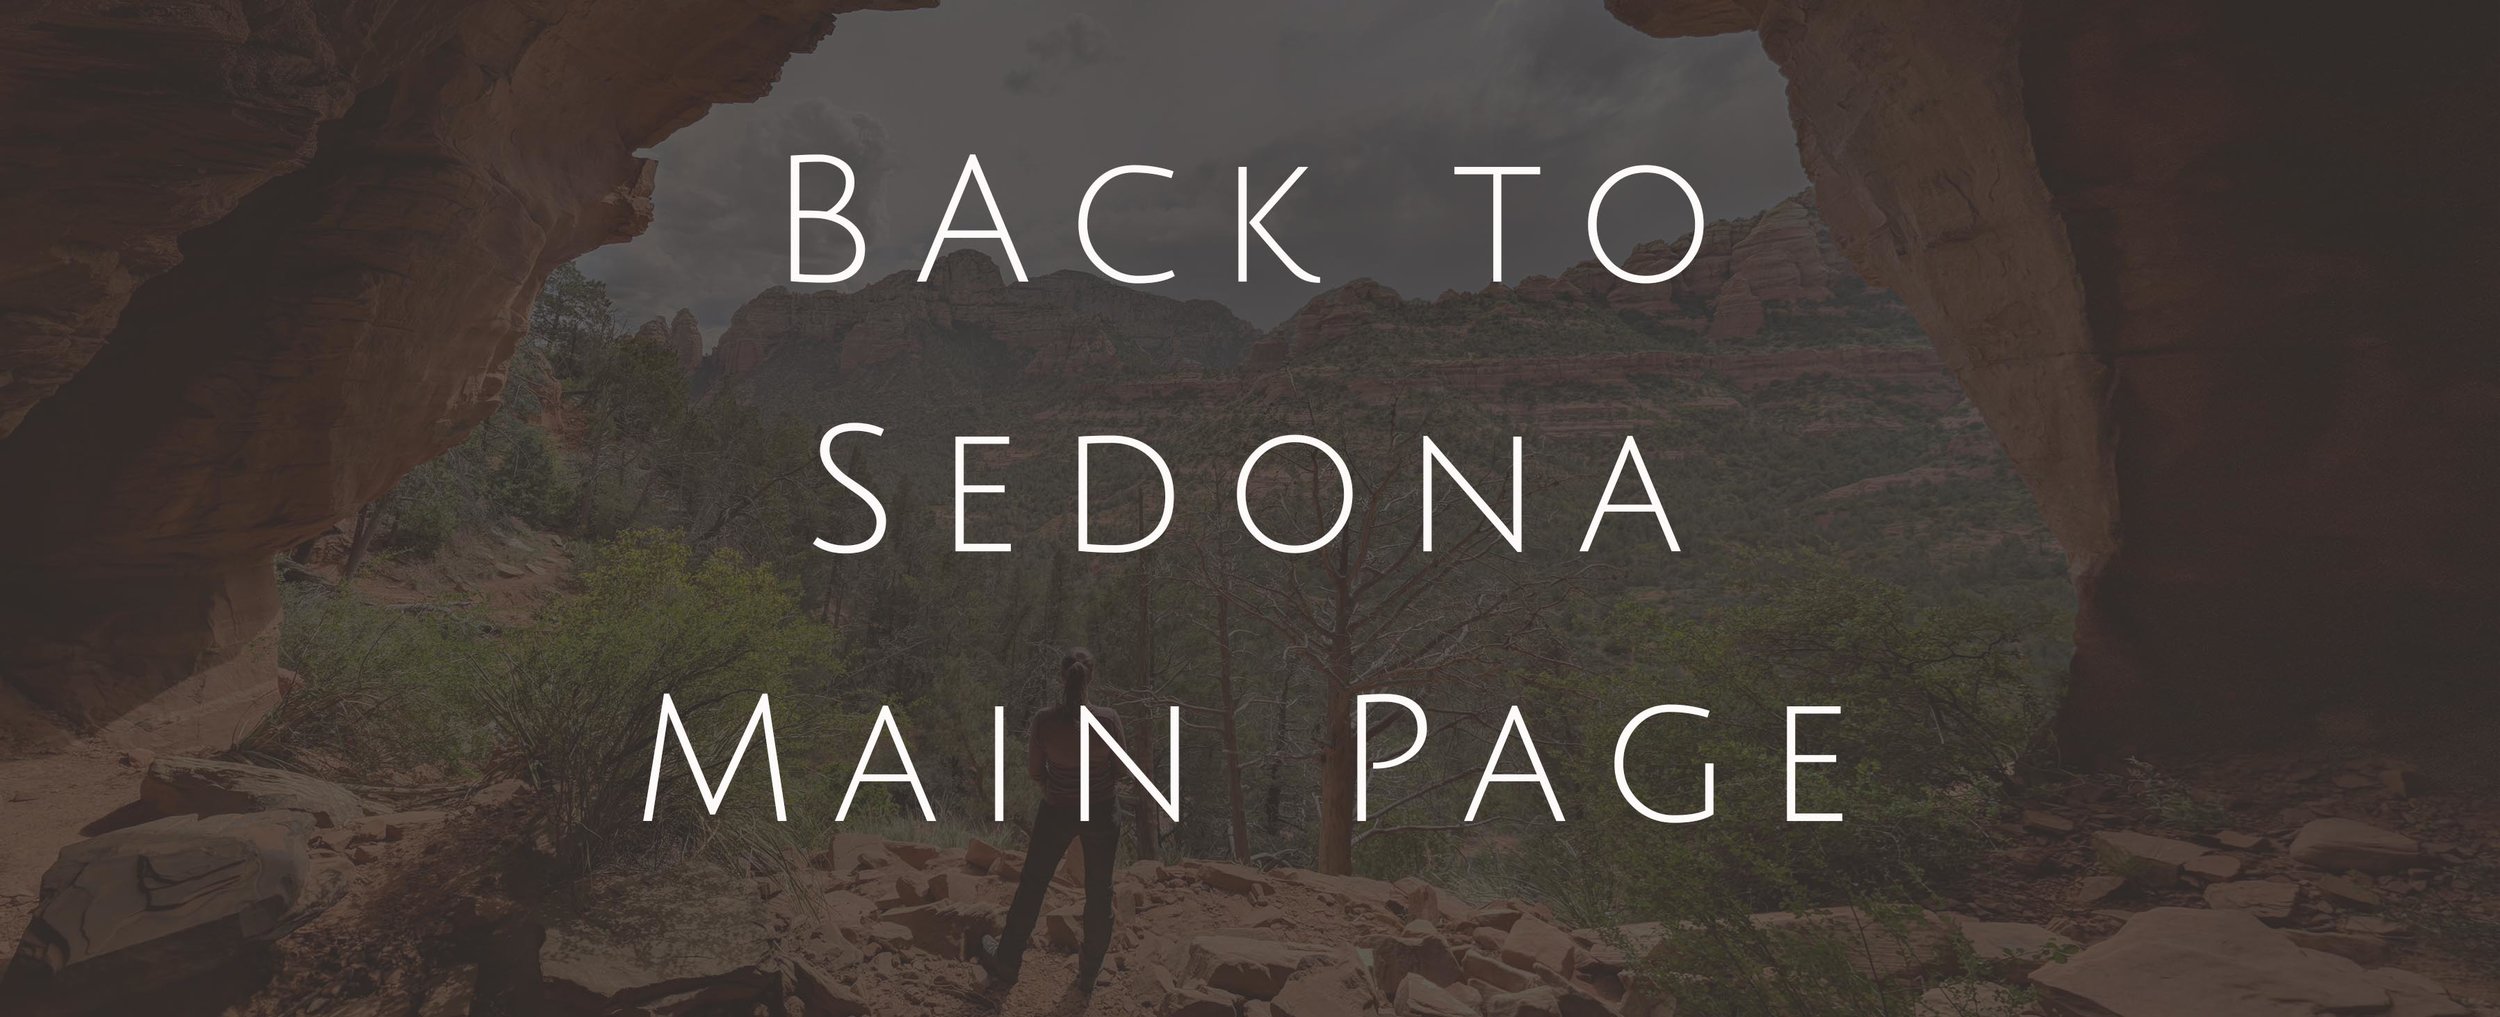 Back to Sedona Main Page.jpg